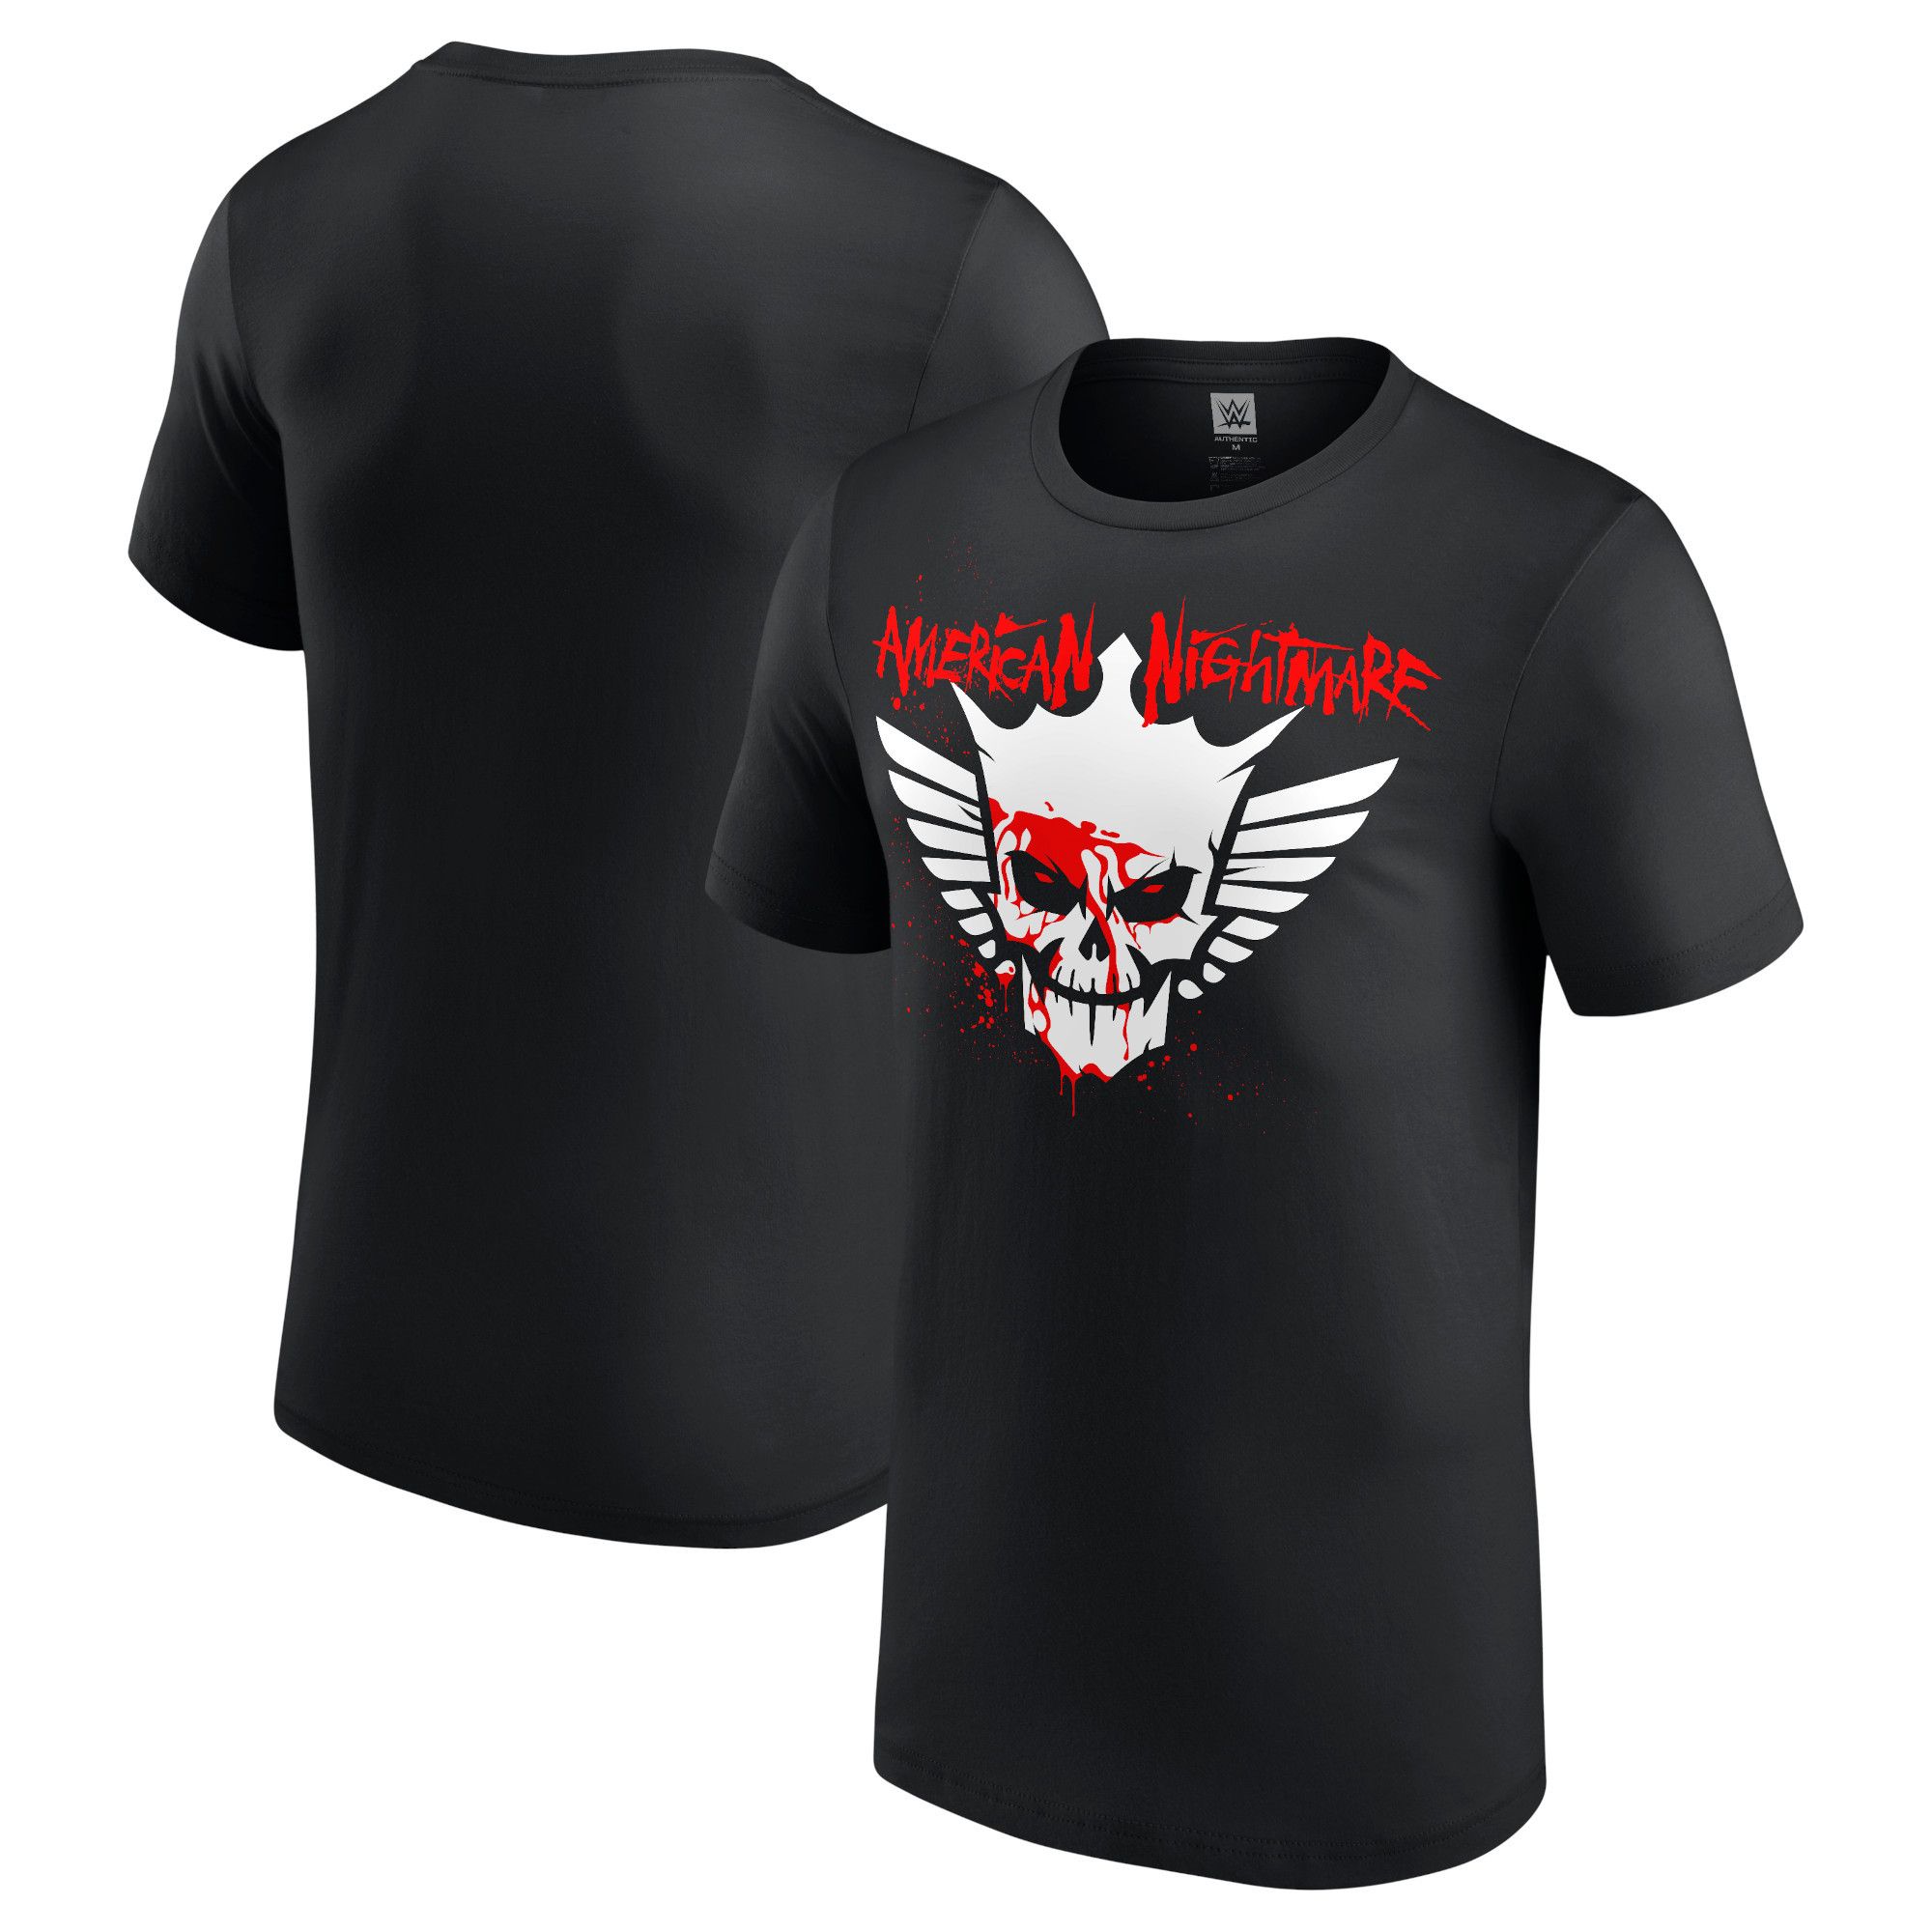 T-Shirt Wwe Cody Rhodes Bloody Nightmare - Noir - Homme